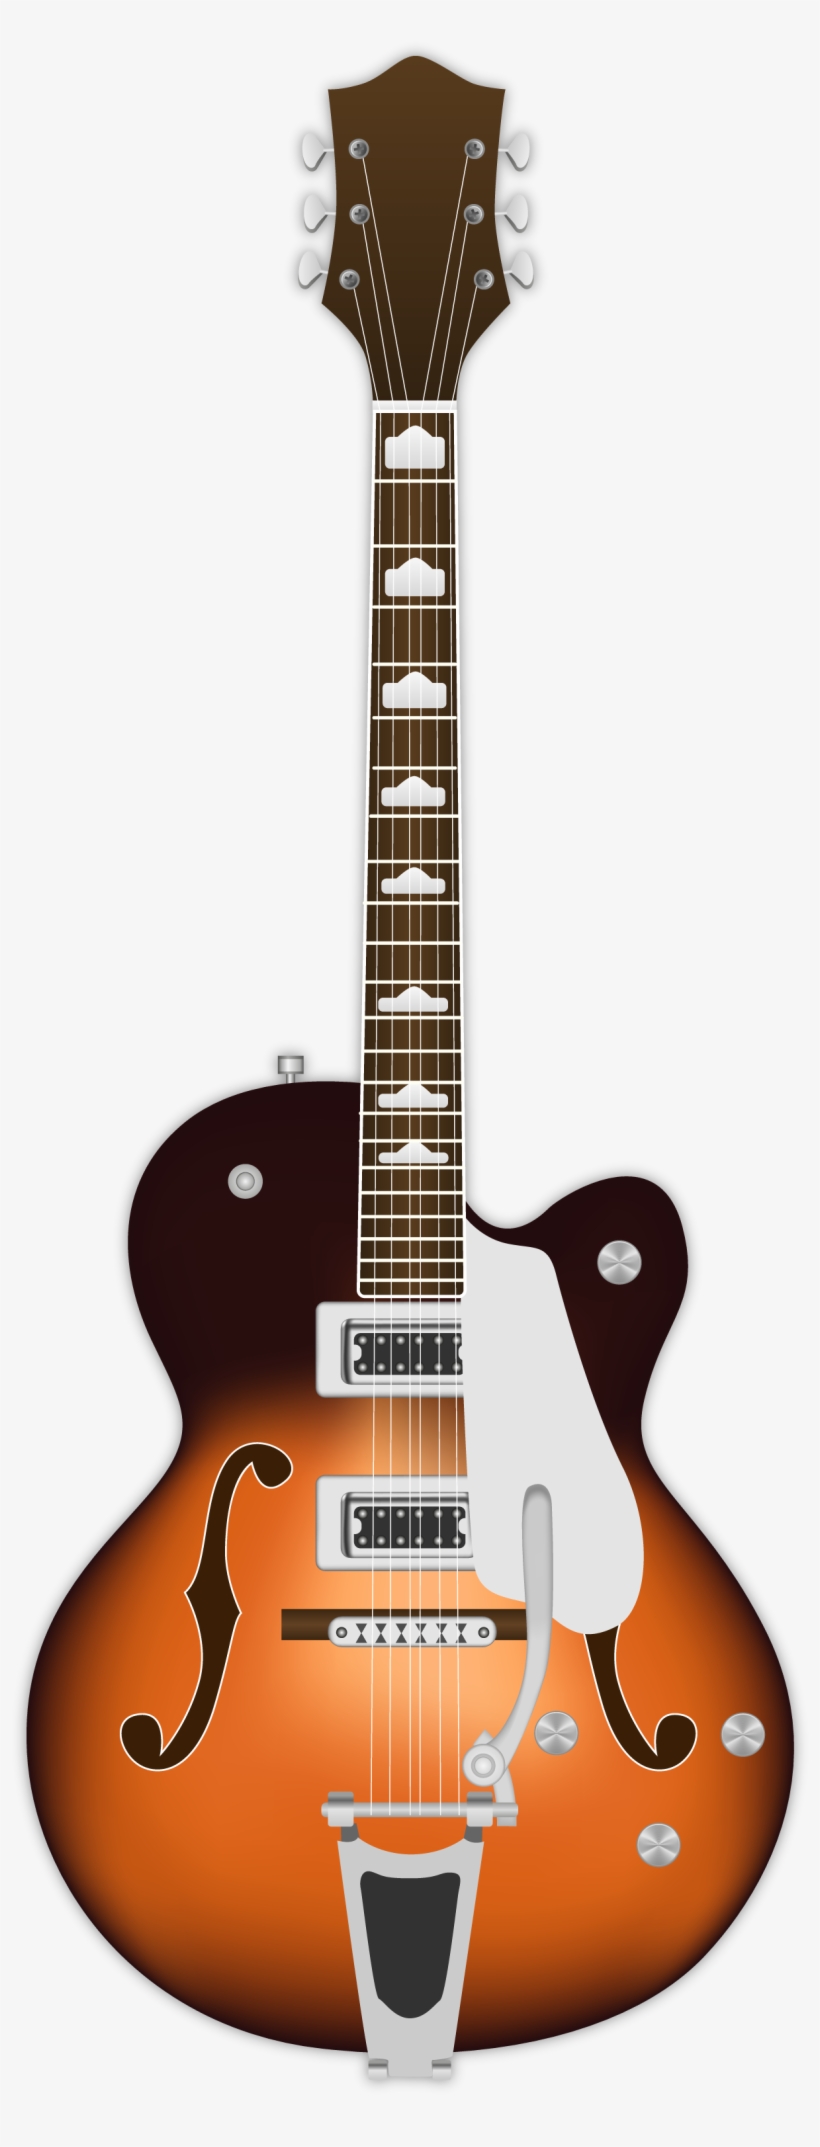 Guitar Clipart Png Image 02 - Transparent Clipart Electric Guitar, transparent png #3983616